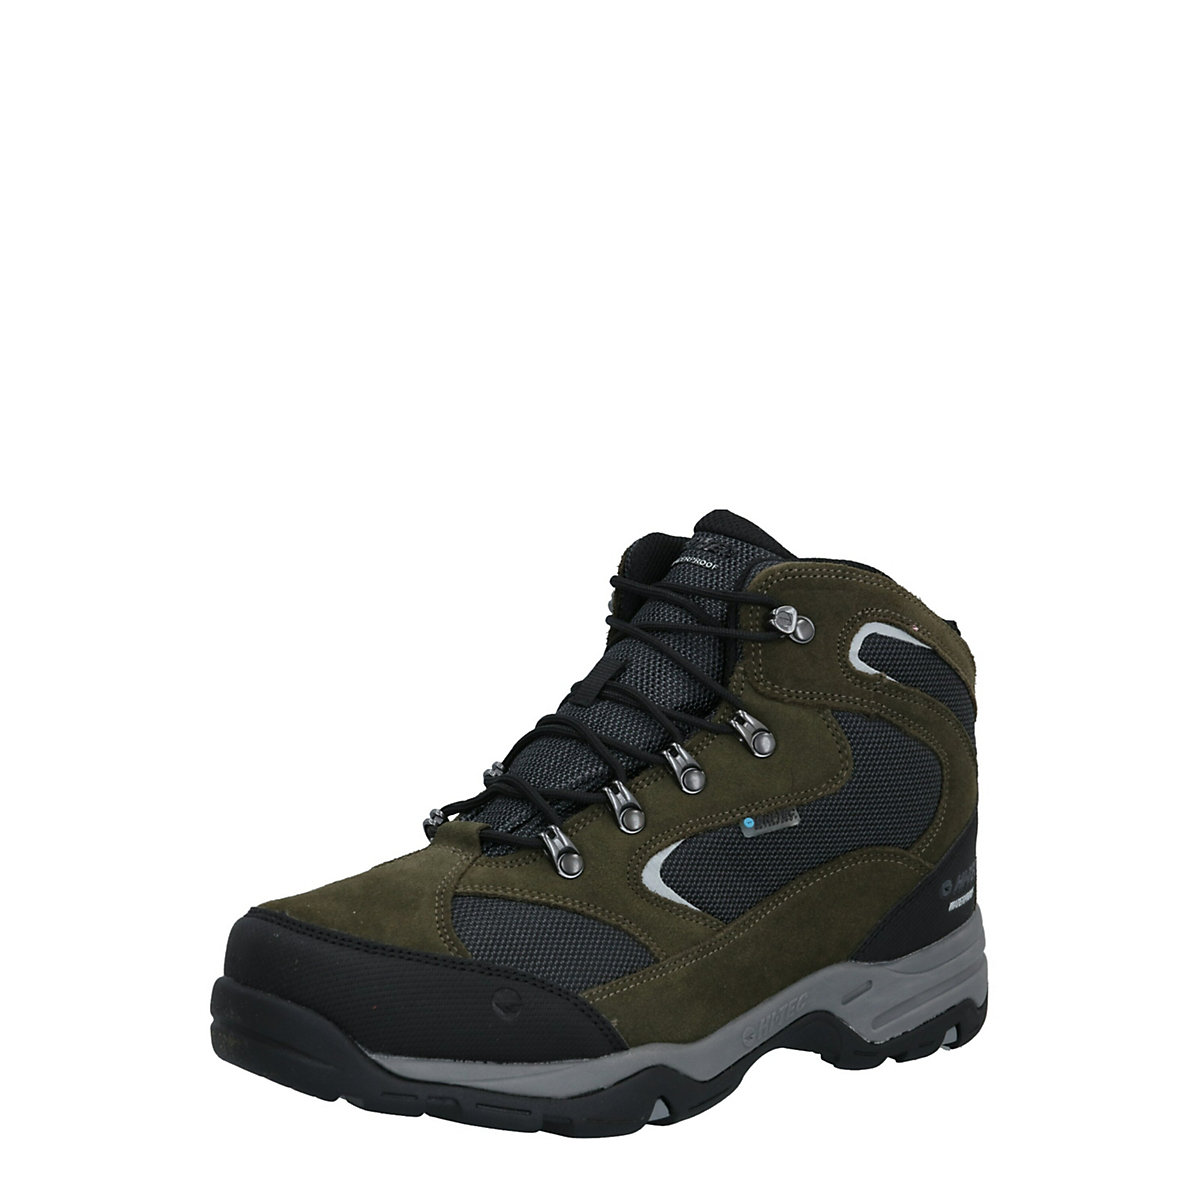 HI-TEC boots Wanderstiefel grau Modell 1